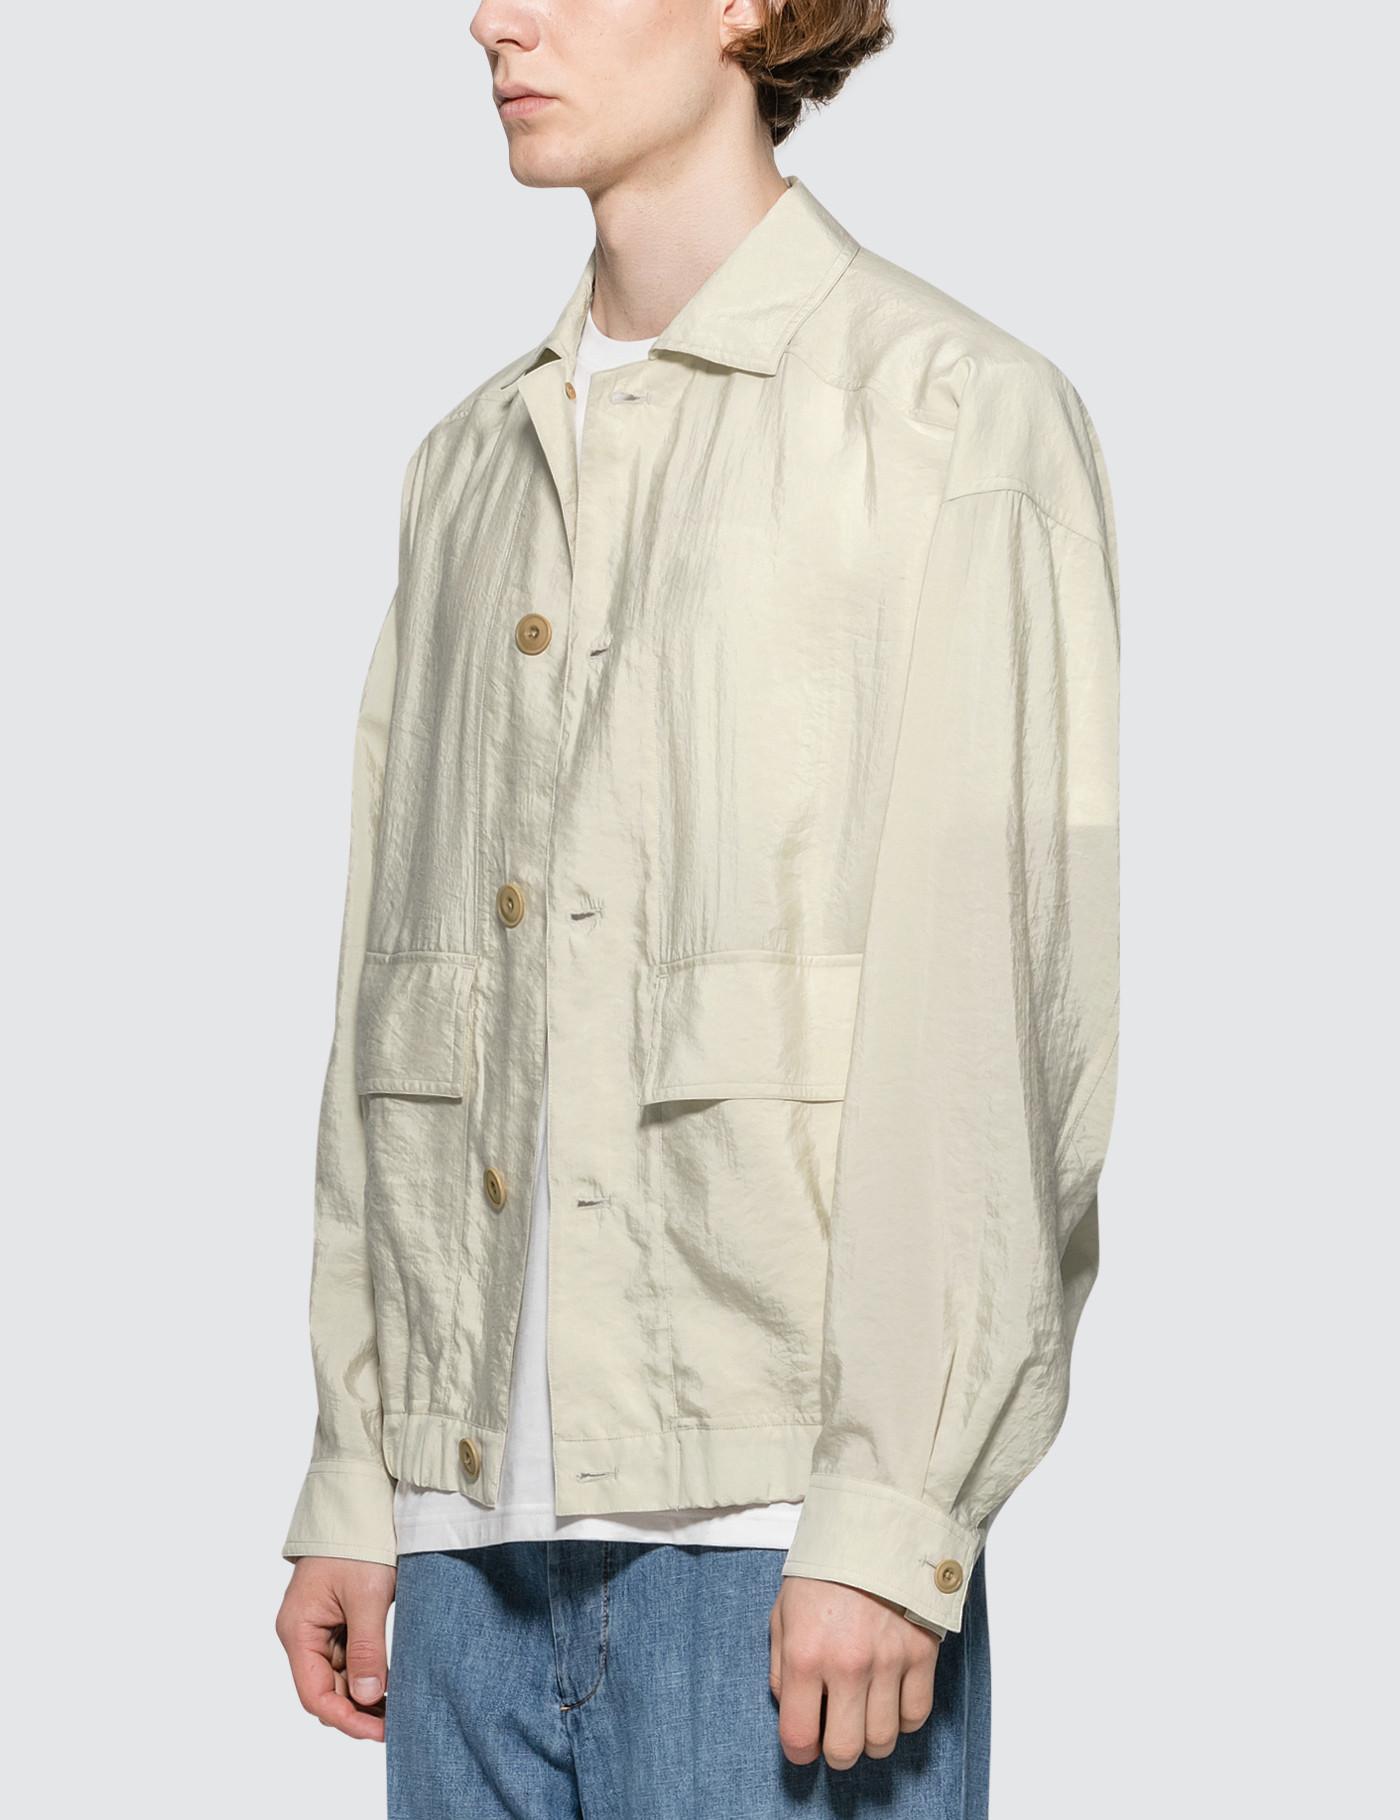 Lemaire Silk Oversized Blouson Jacket in Beige (Natural) for Men - Lyst